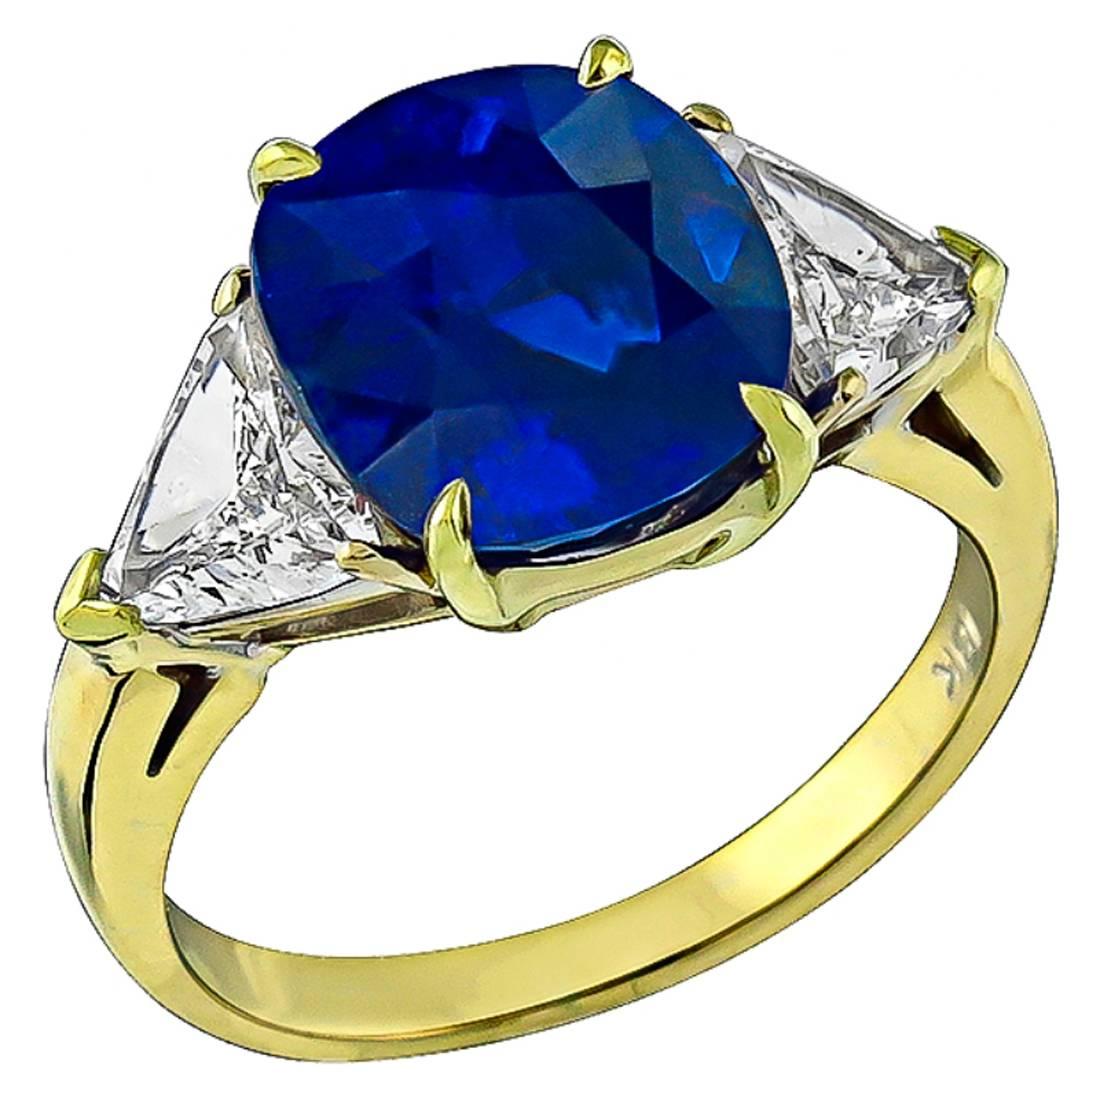 Stunning 5.28 Carat Cushion Cut Sapphire Diamond Gold Engagement Ring For Sale